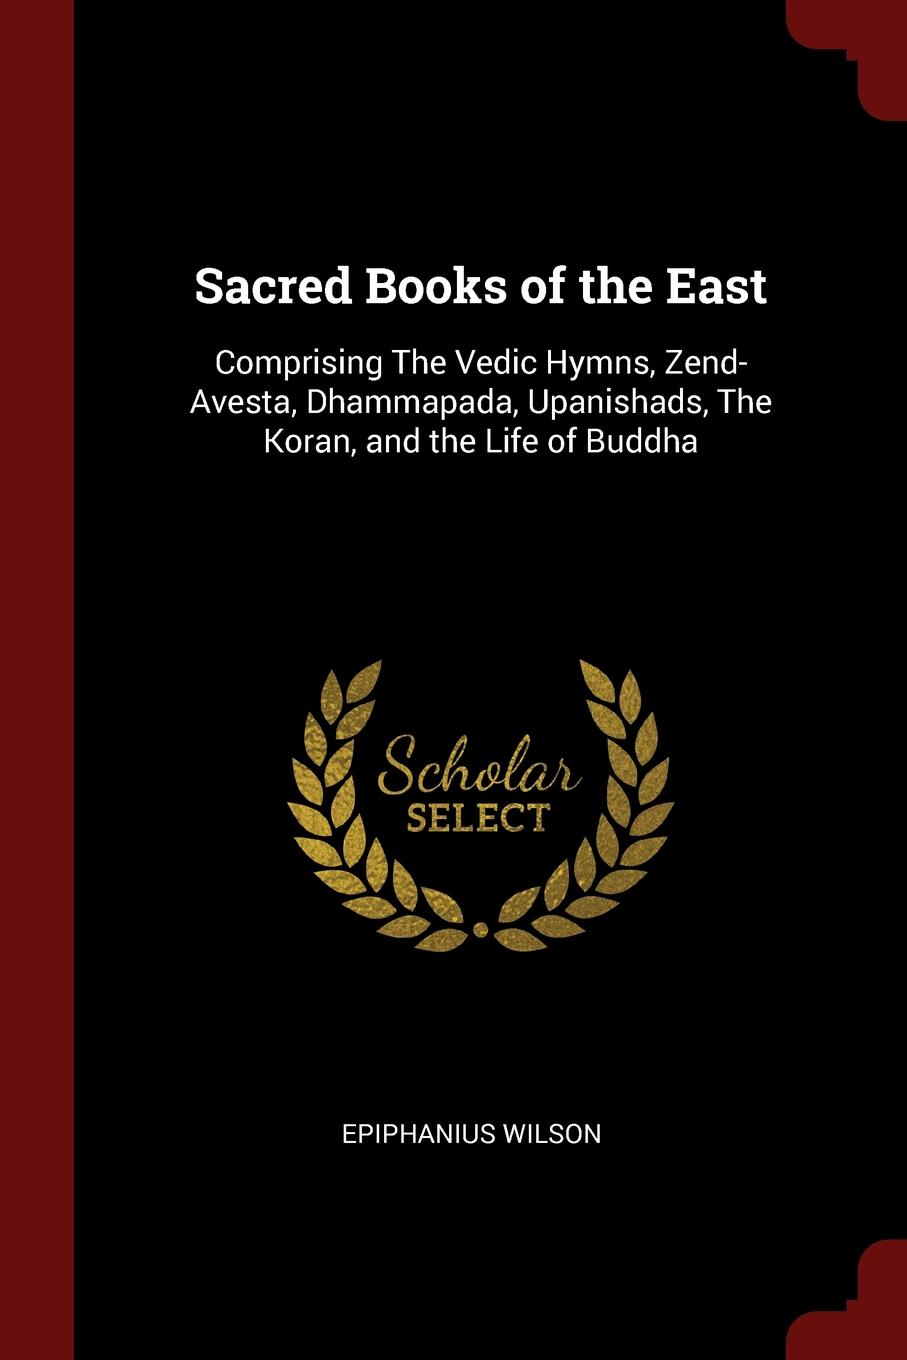 Sacred Books of the East. Comprising The Vedic Hymns, Zend-Avesta, Dhammapada, Upanishads, The Koran, and the Life of Buddha